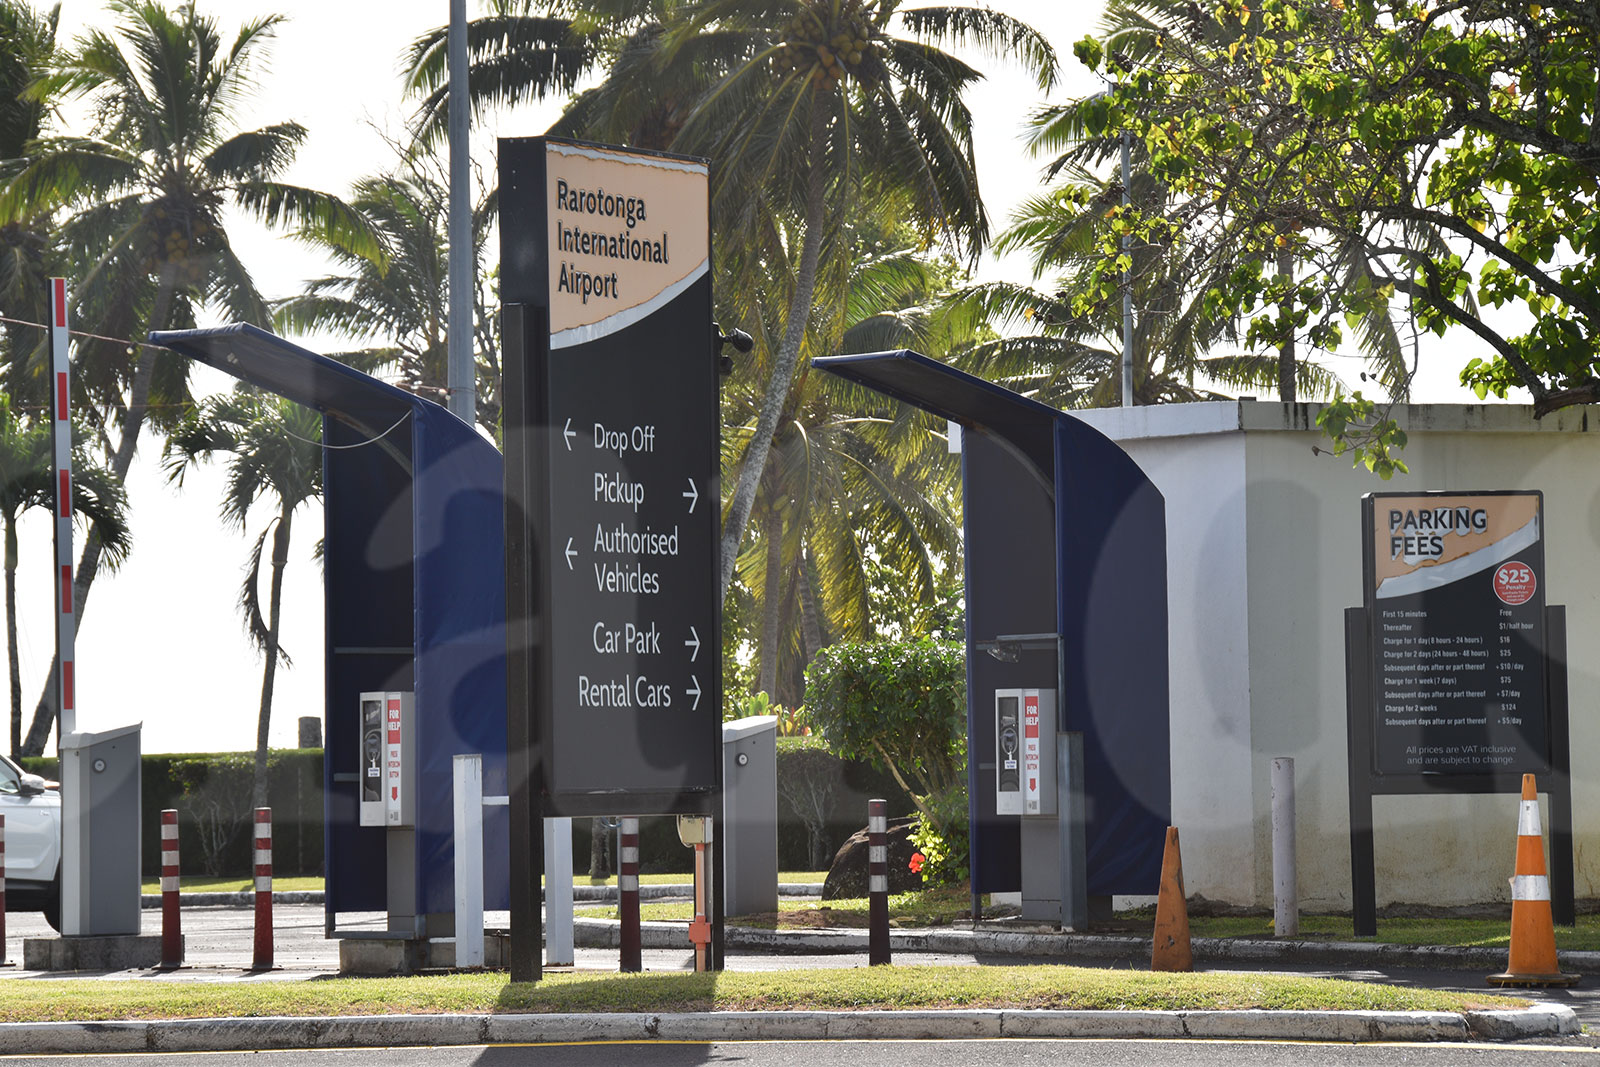 Rarotonga International Airport parking system back online after $17,000 repair